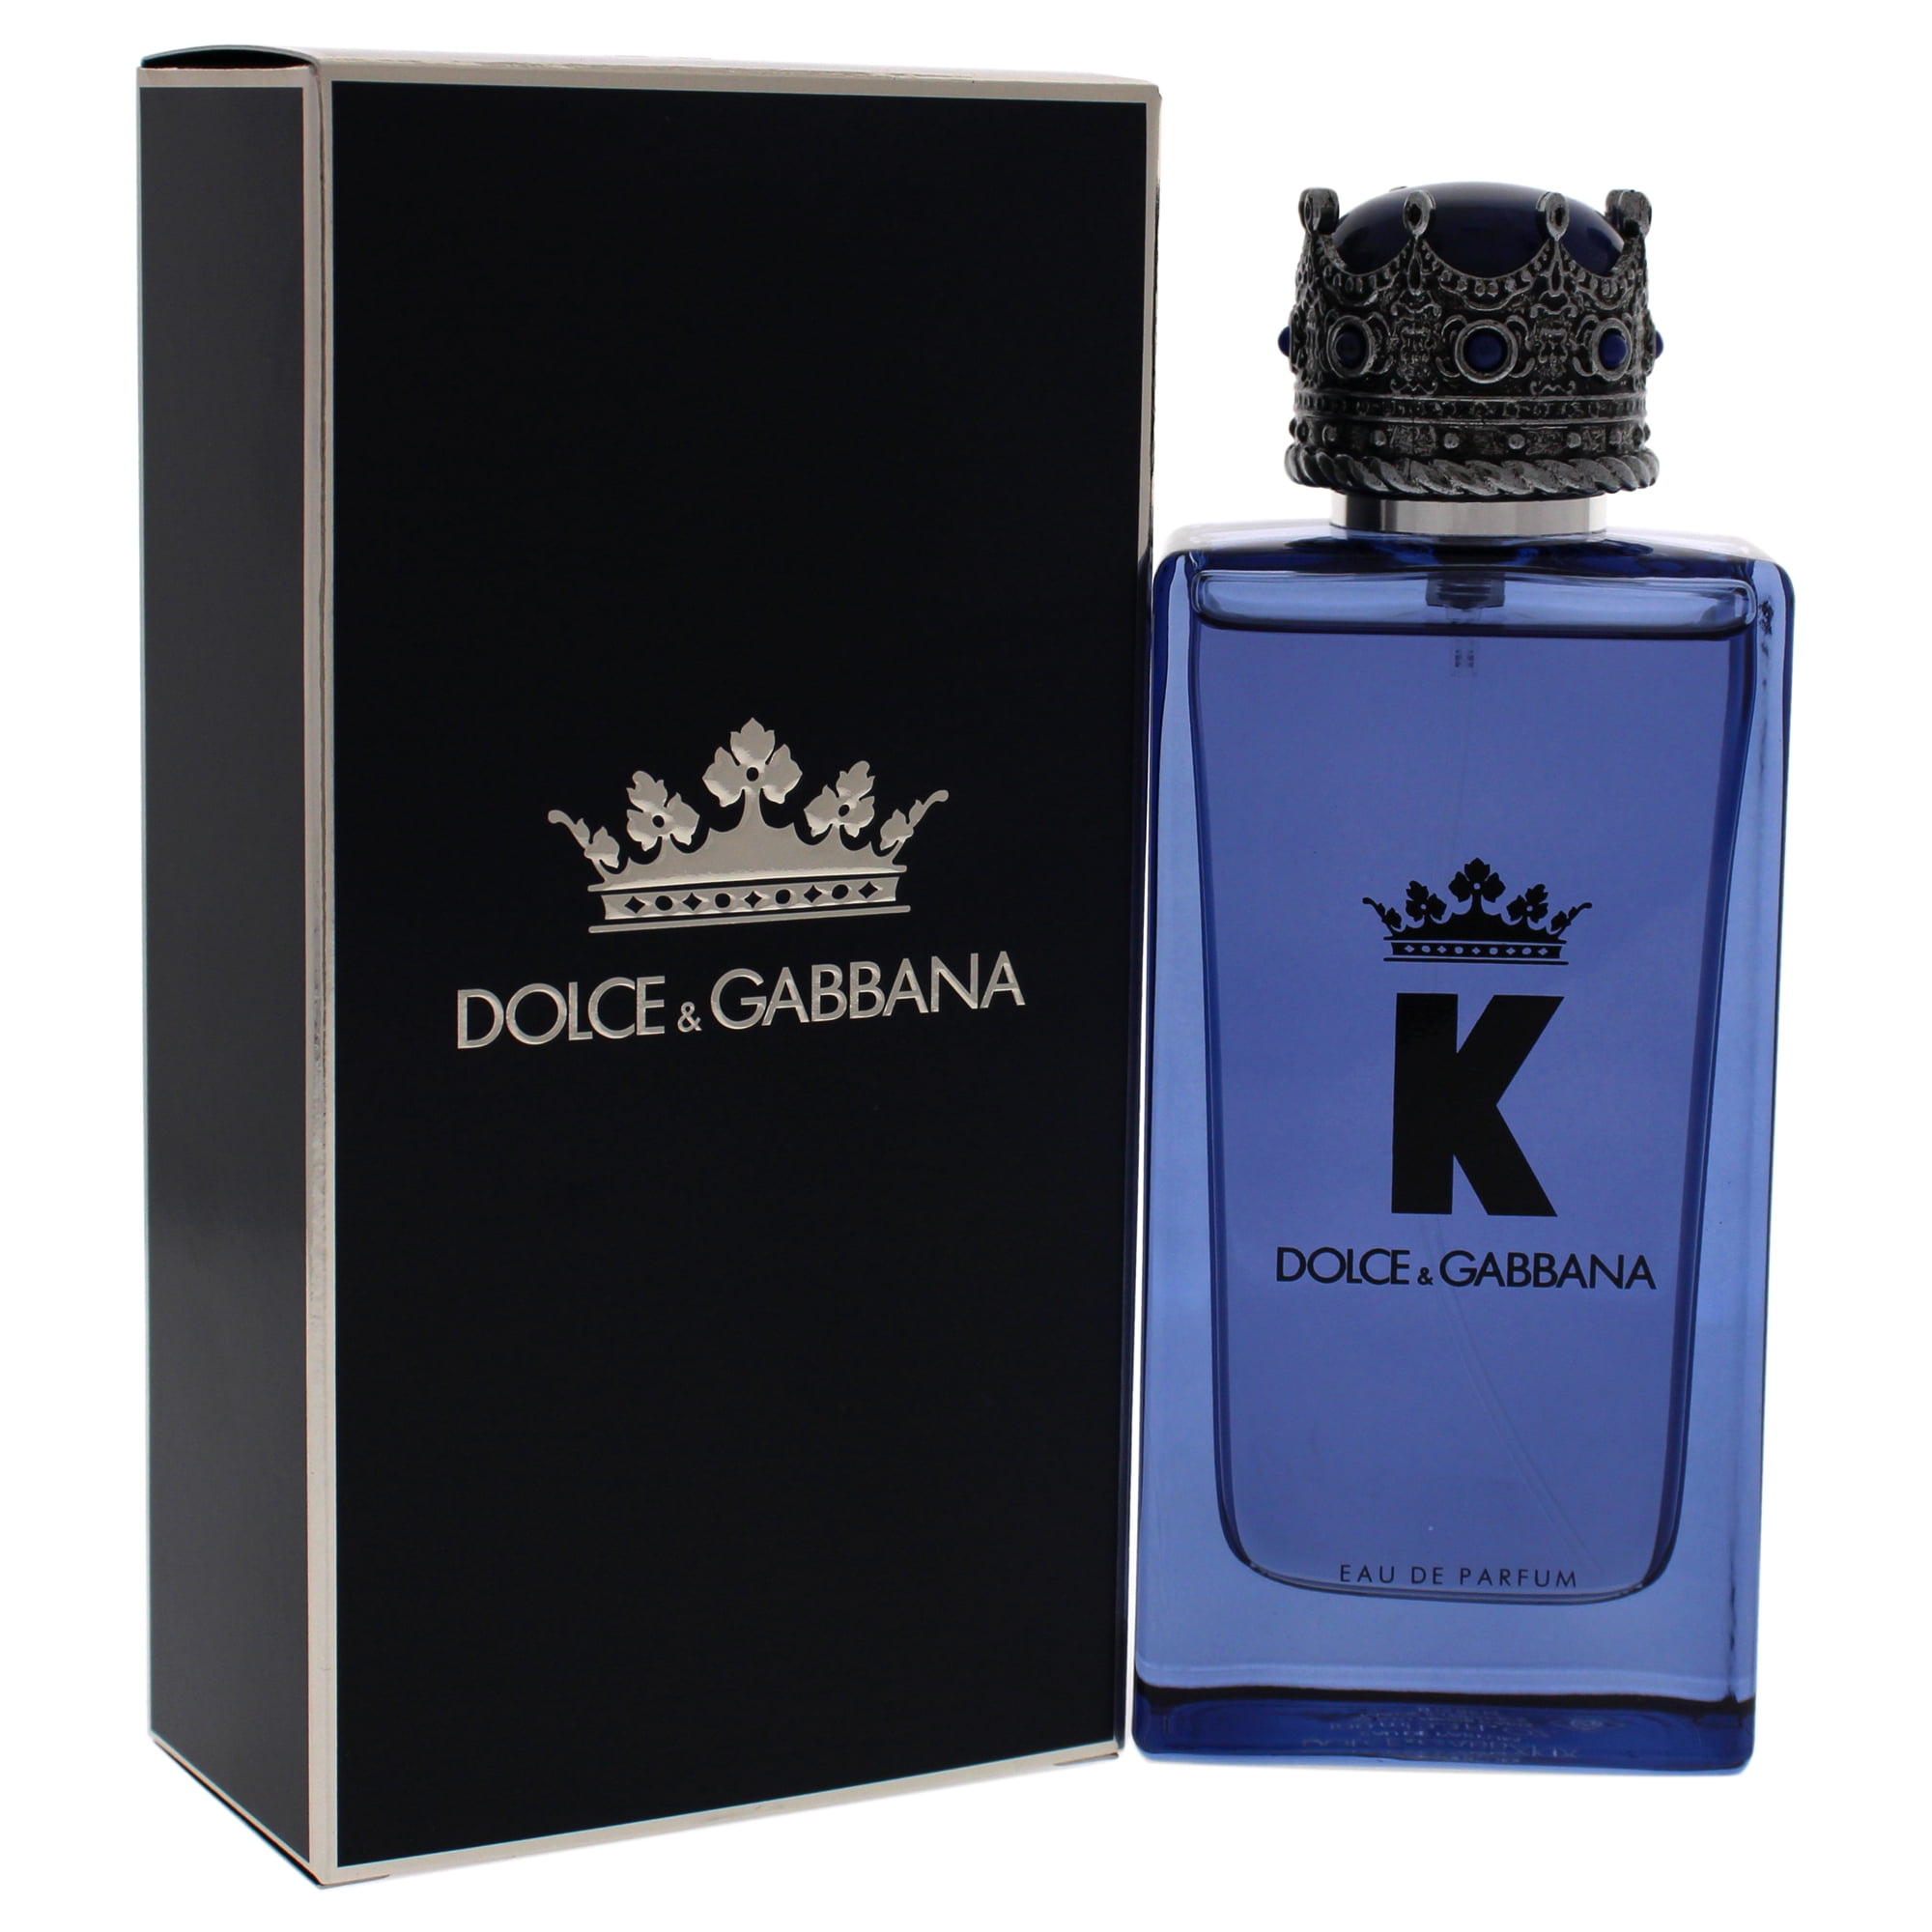 Dolce Gabbana King. Духи Дольче Габбана Кинг. K by Dolce Gabbana.